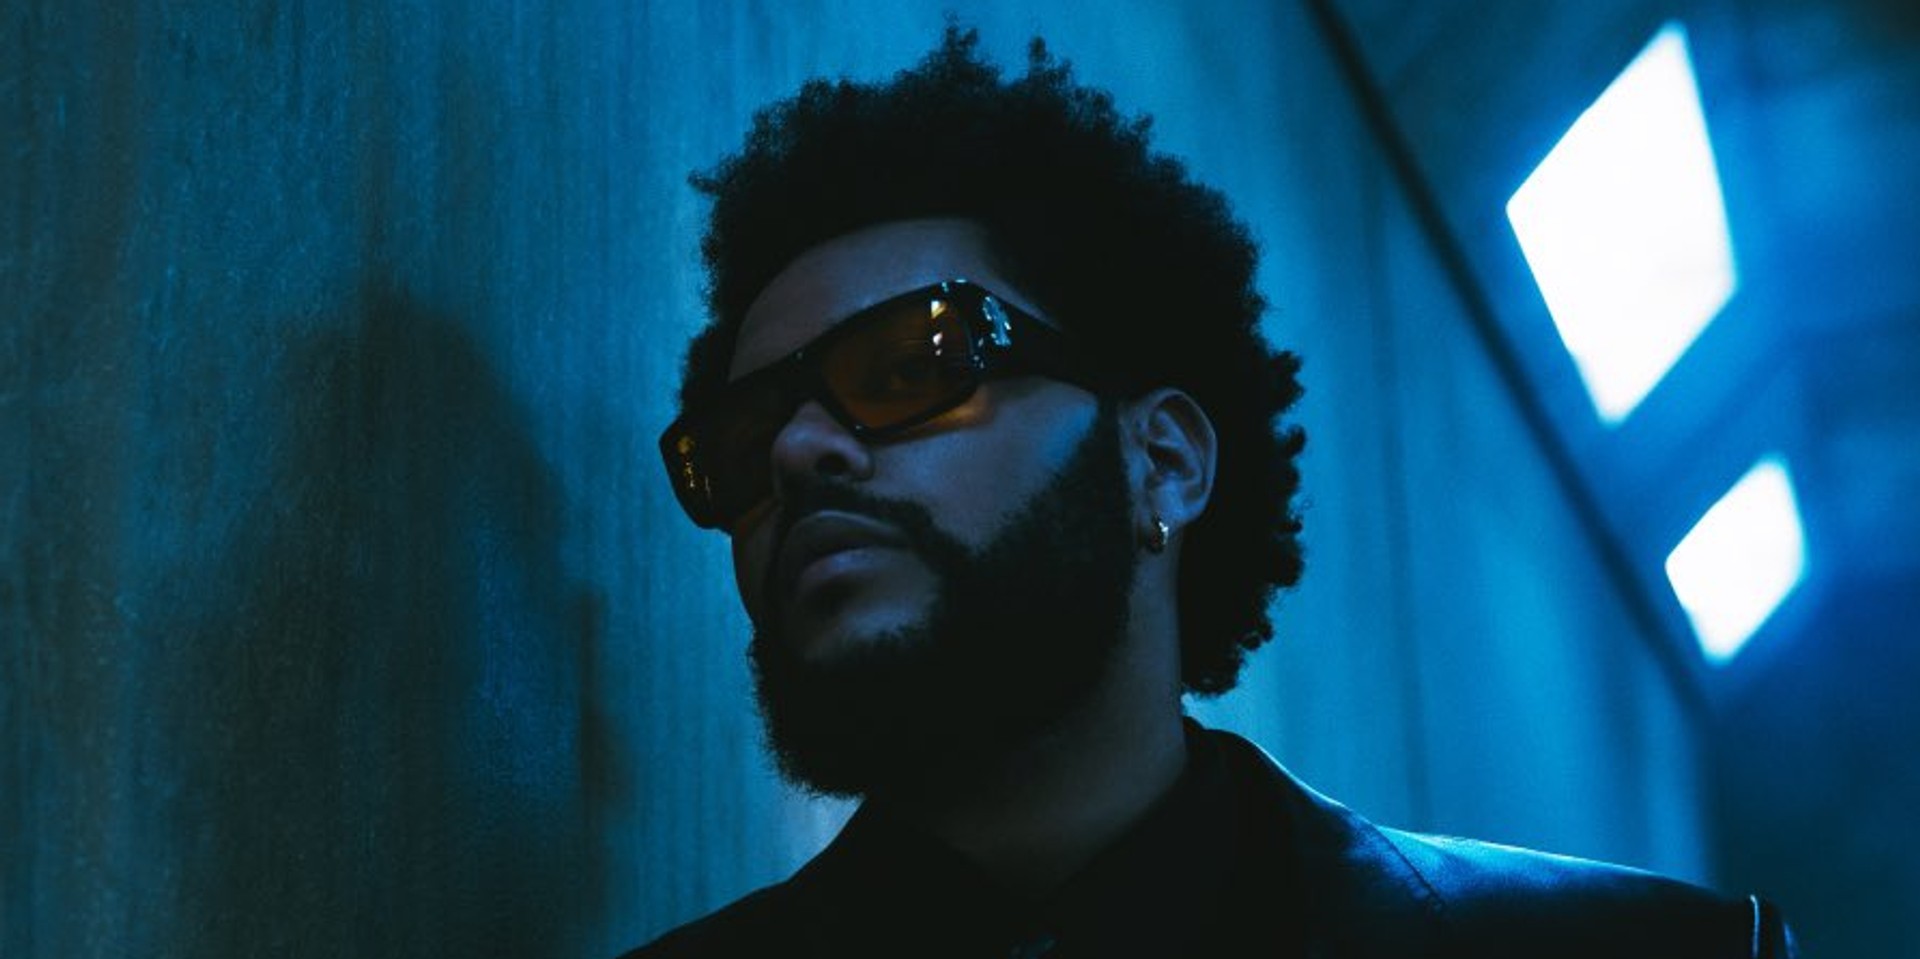 The Weeknd kicks off a new era with brand new single ‘Take My Breath’ - watch